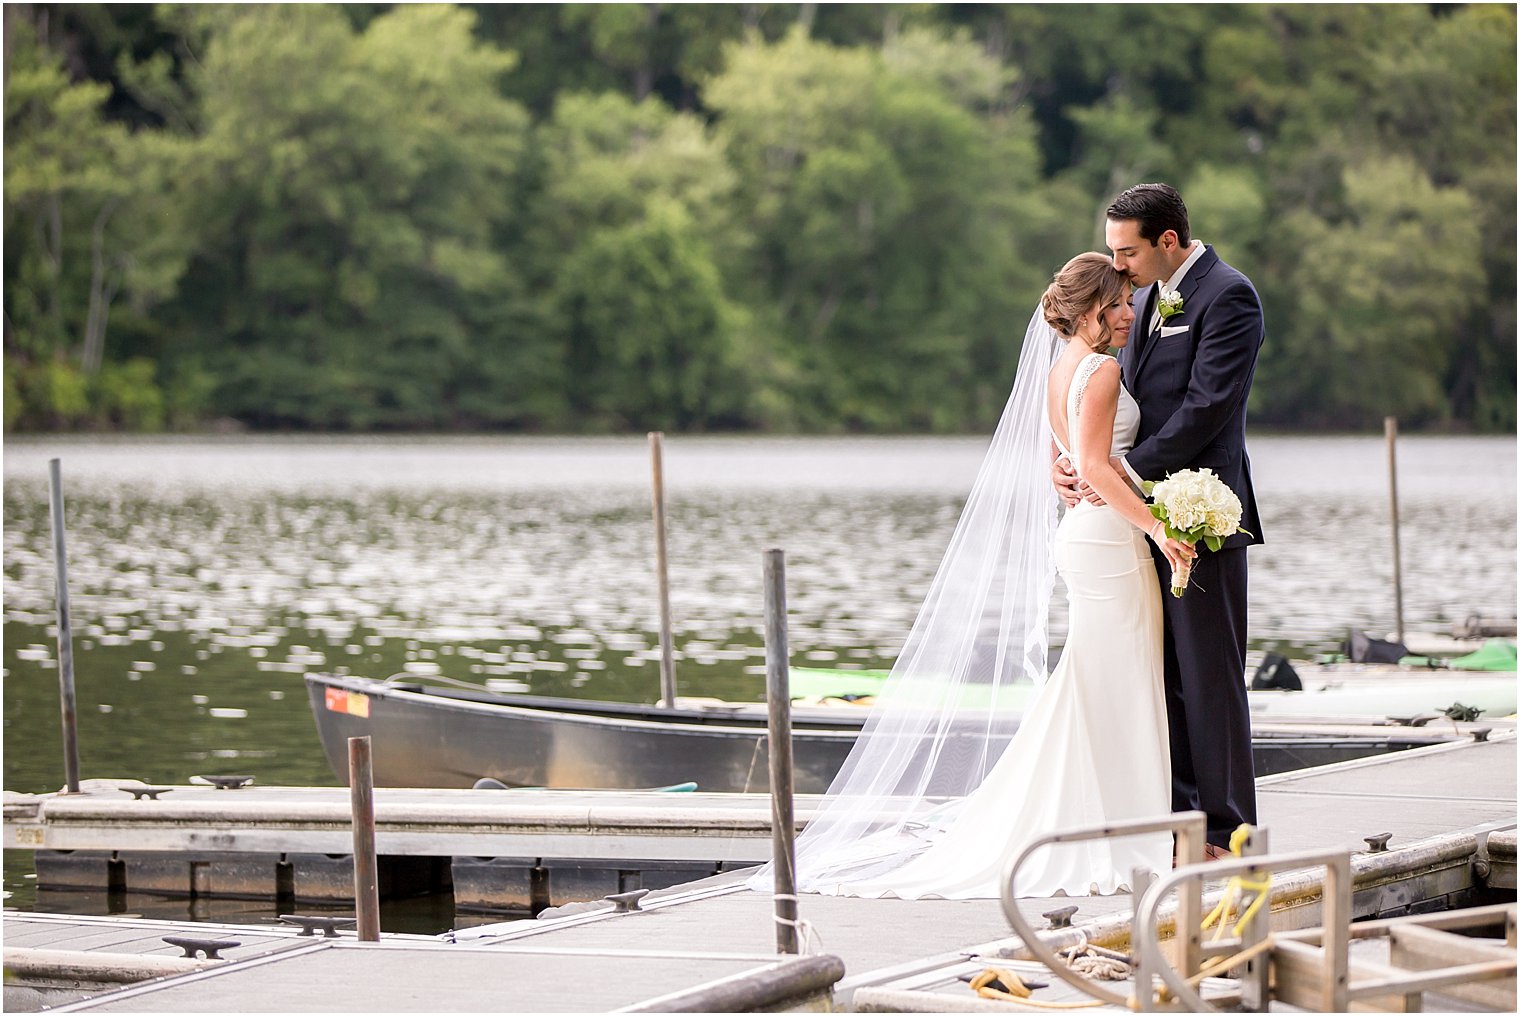 Romantic NJ Wedding at Lake Valhalla